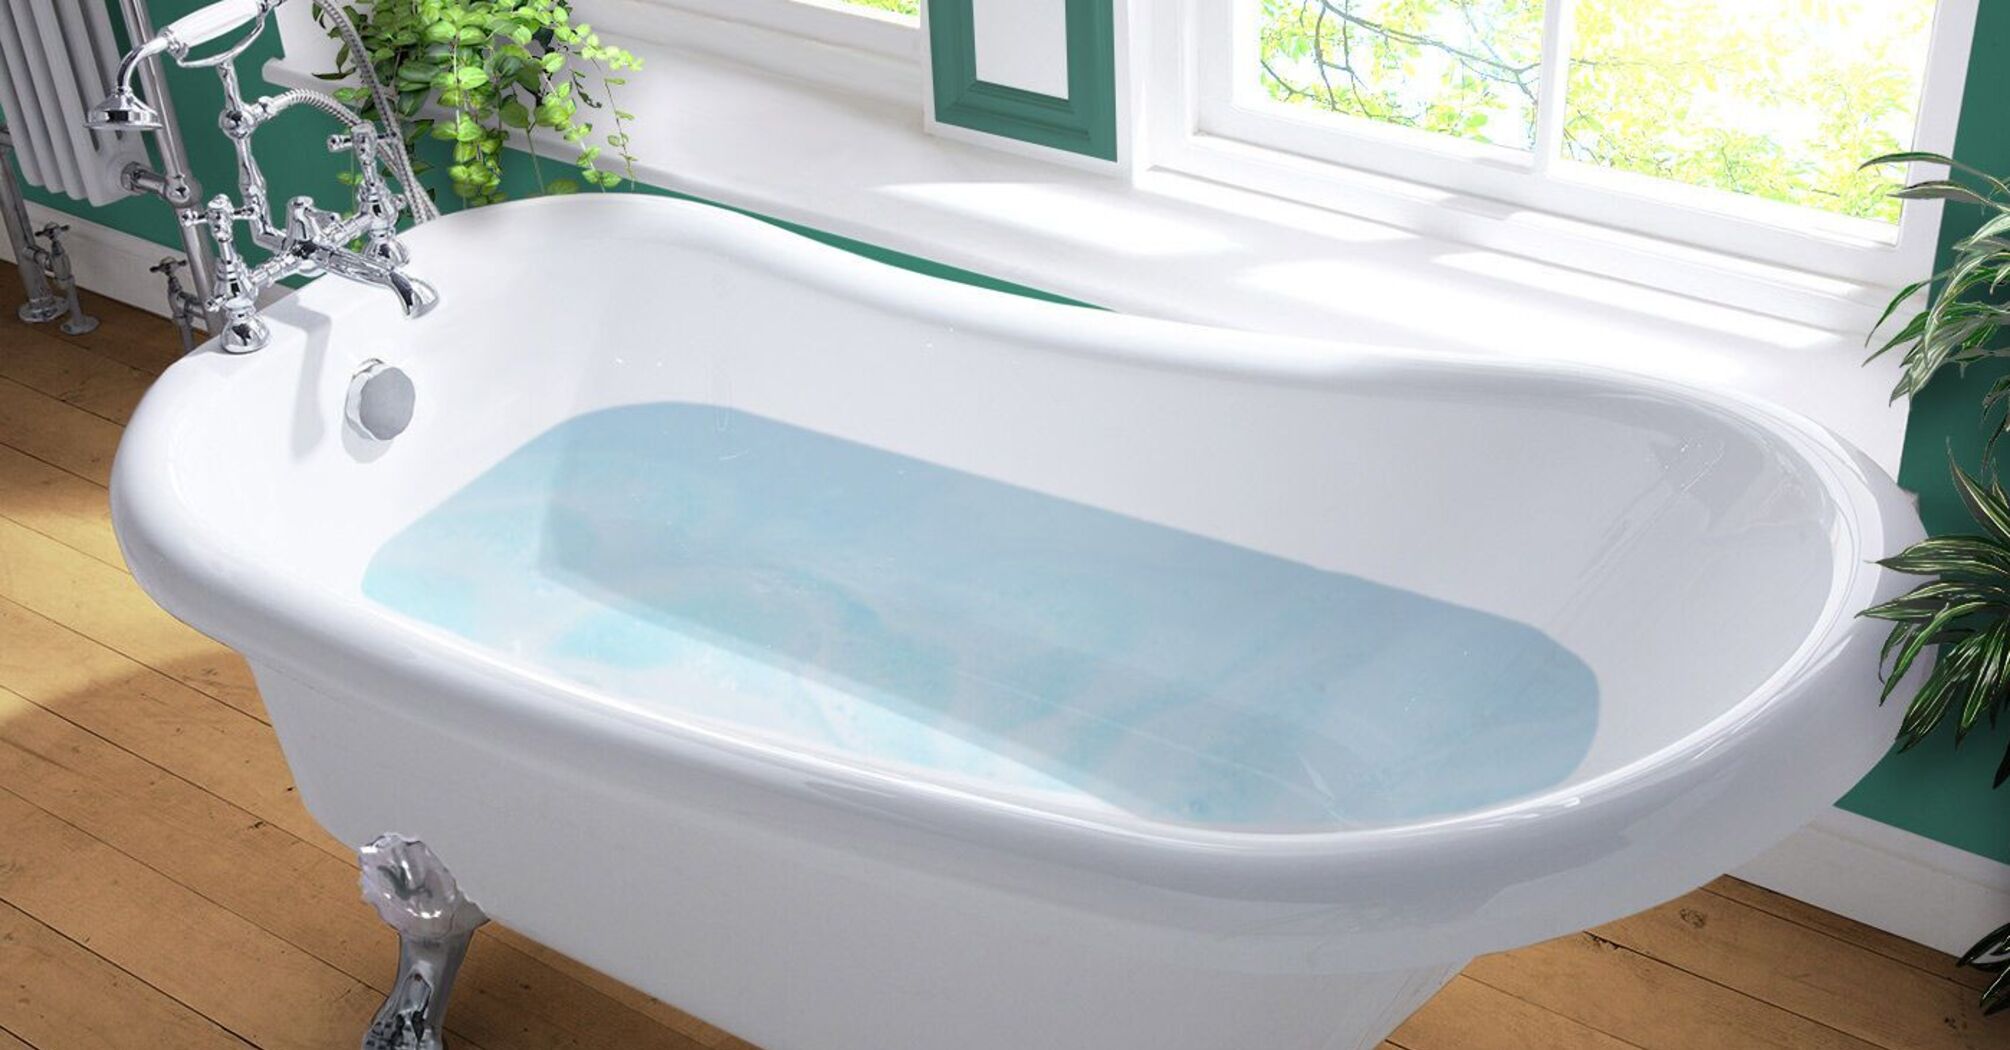 How to clean an acrylic bathtub to a shine